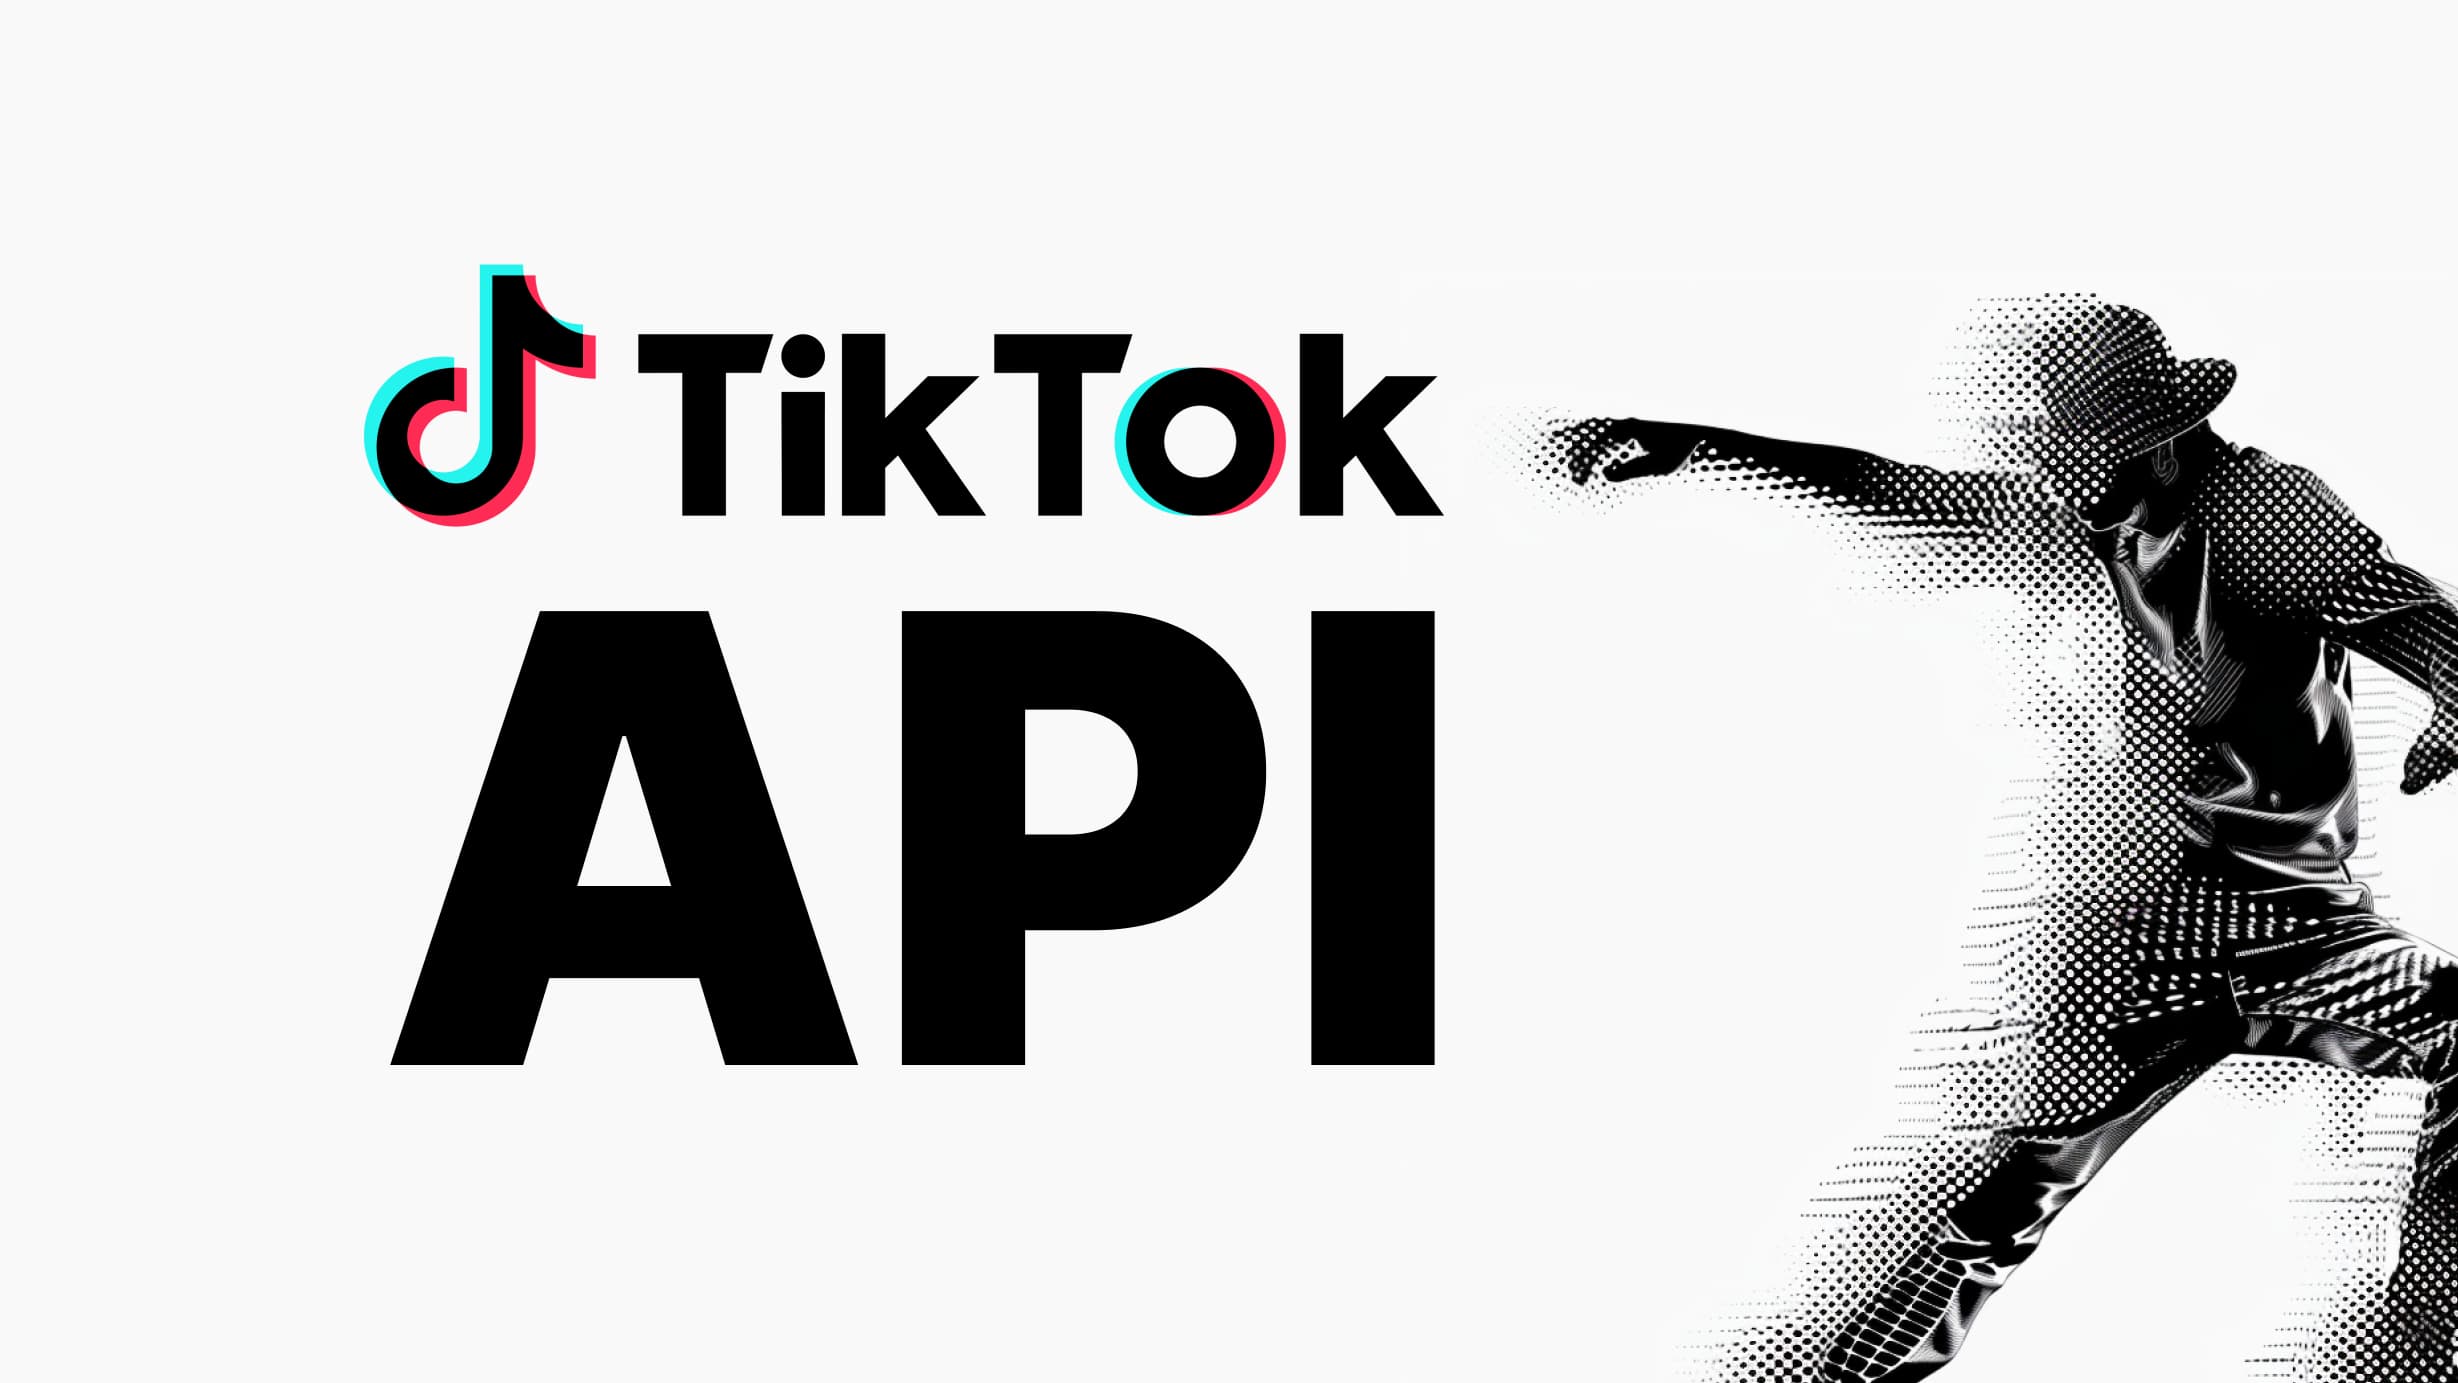 The logo for tik tok api.